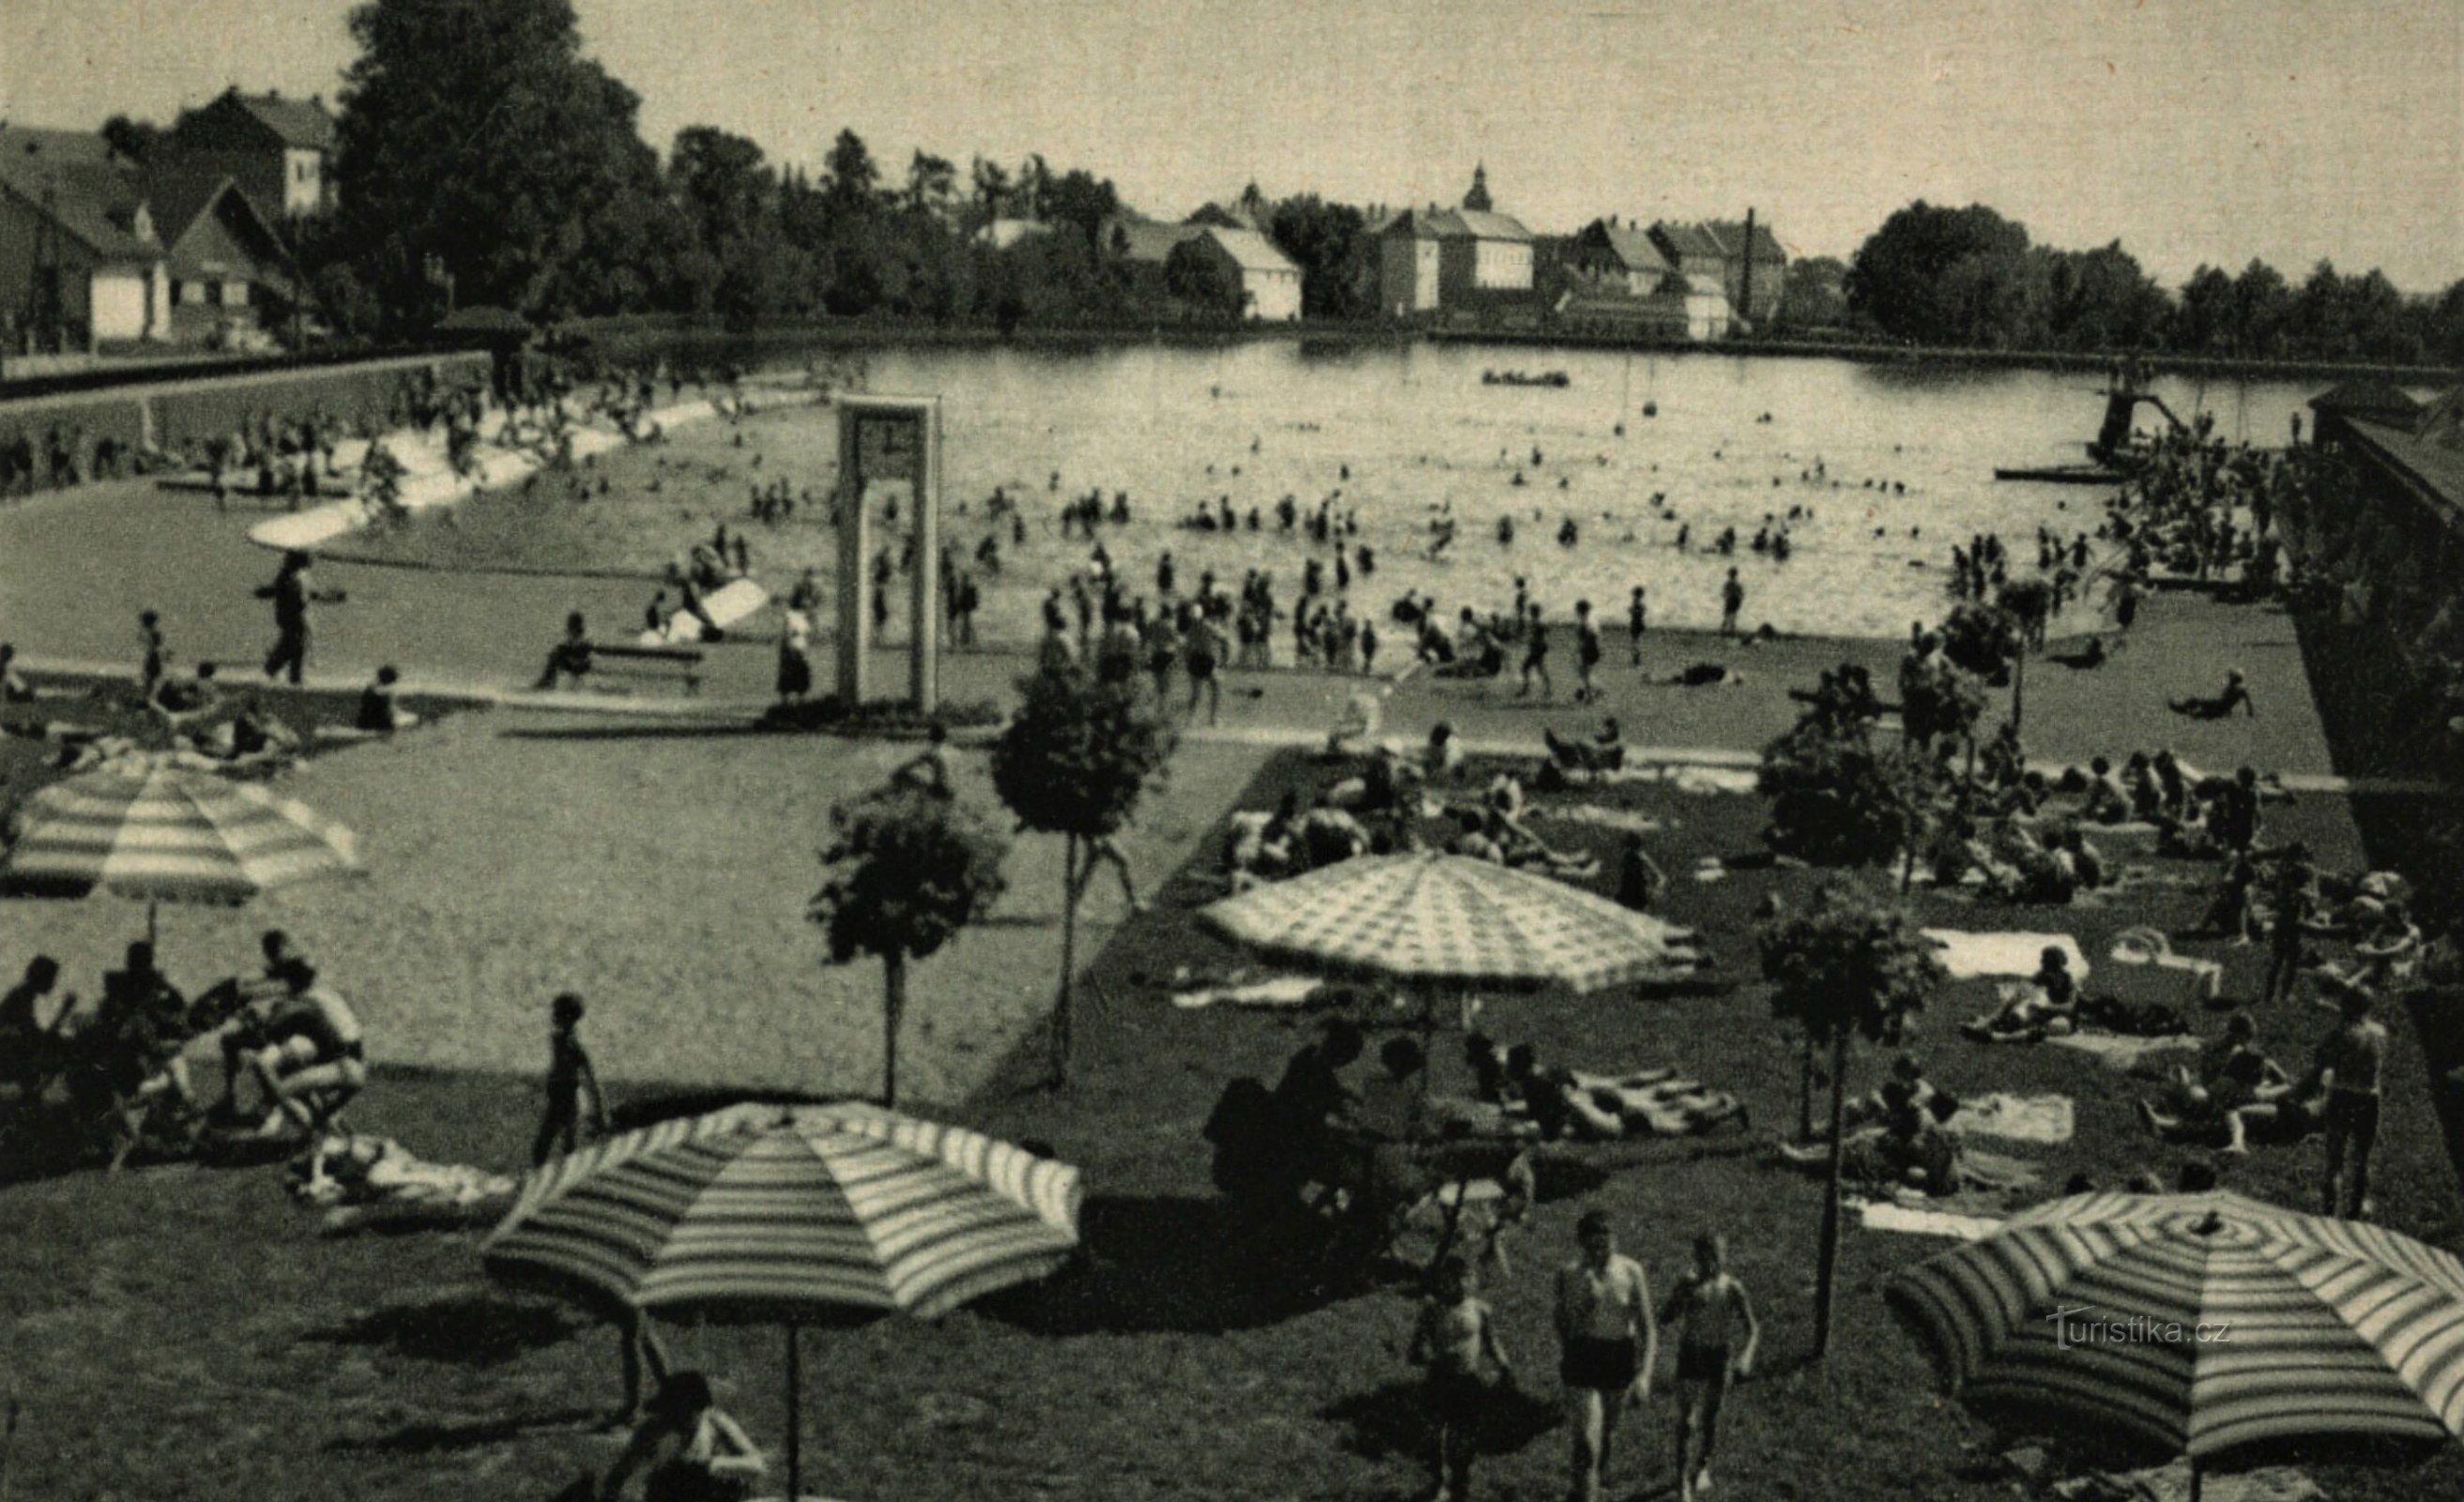 The swimming pool at the Knížete pond in Jičín before 1935